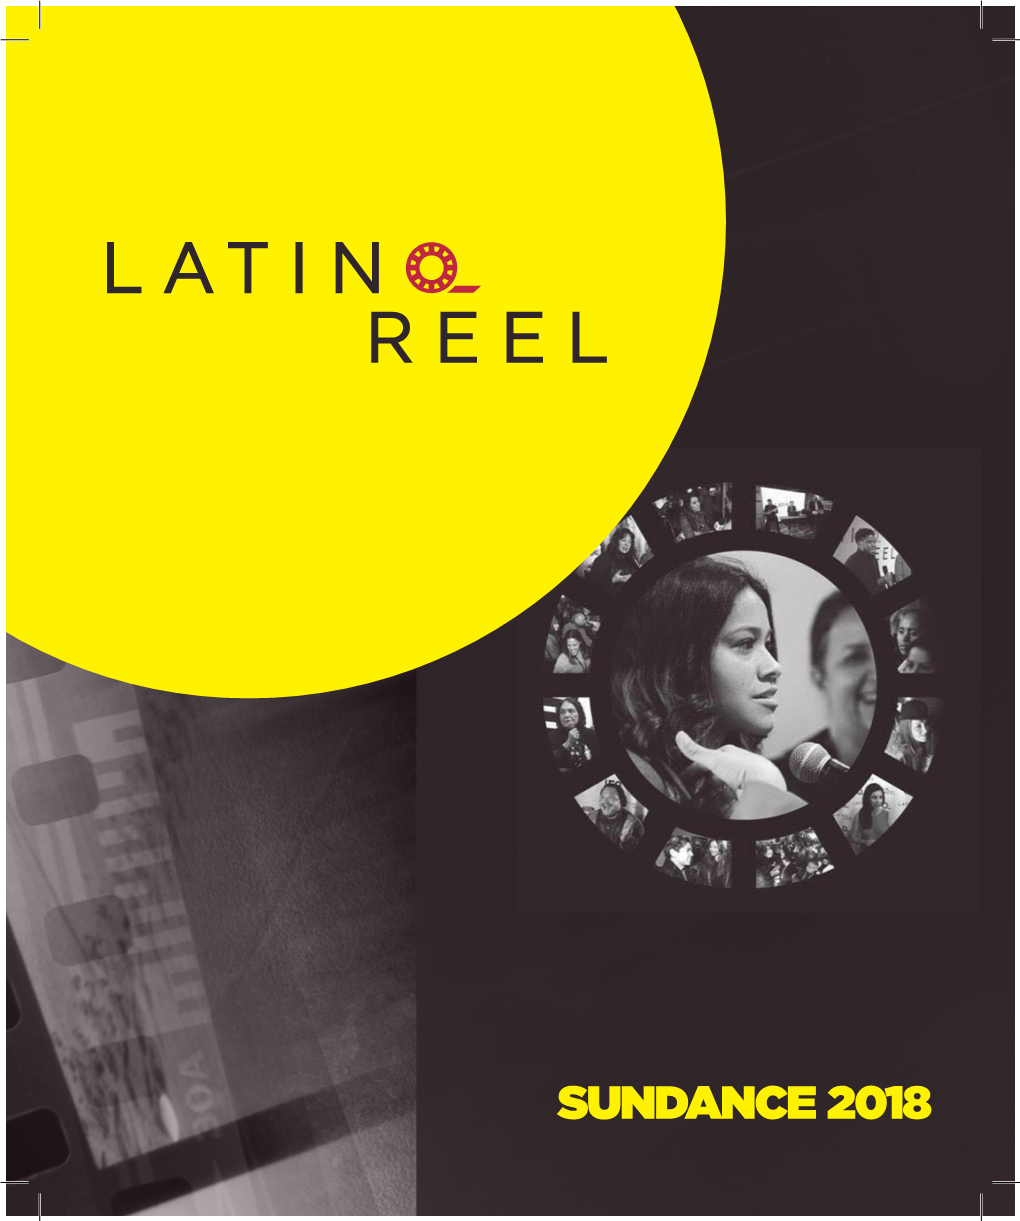 Sundance 2018 1 Title Sponsor Latino Reel Additional Sponsors